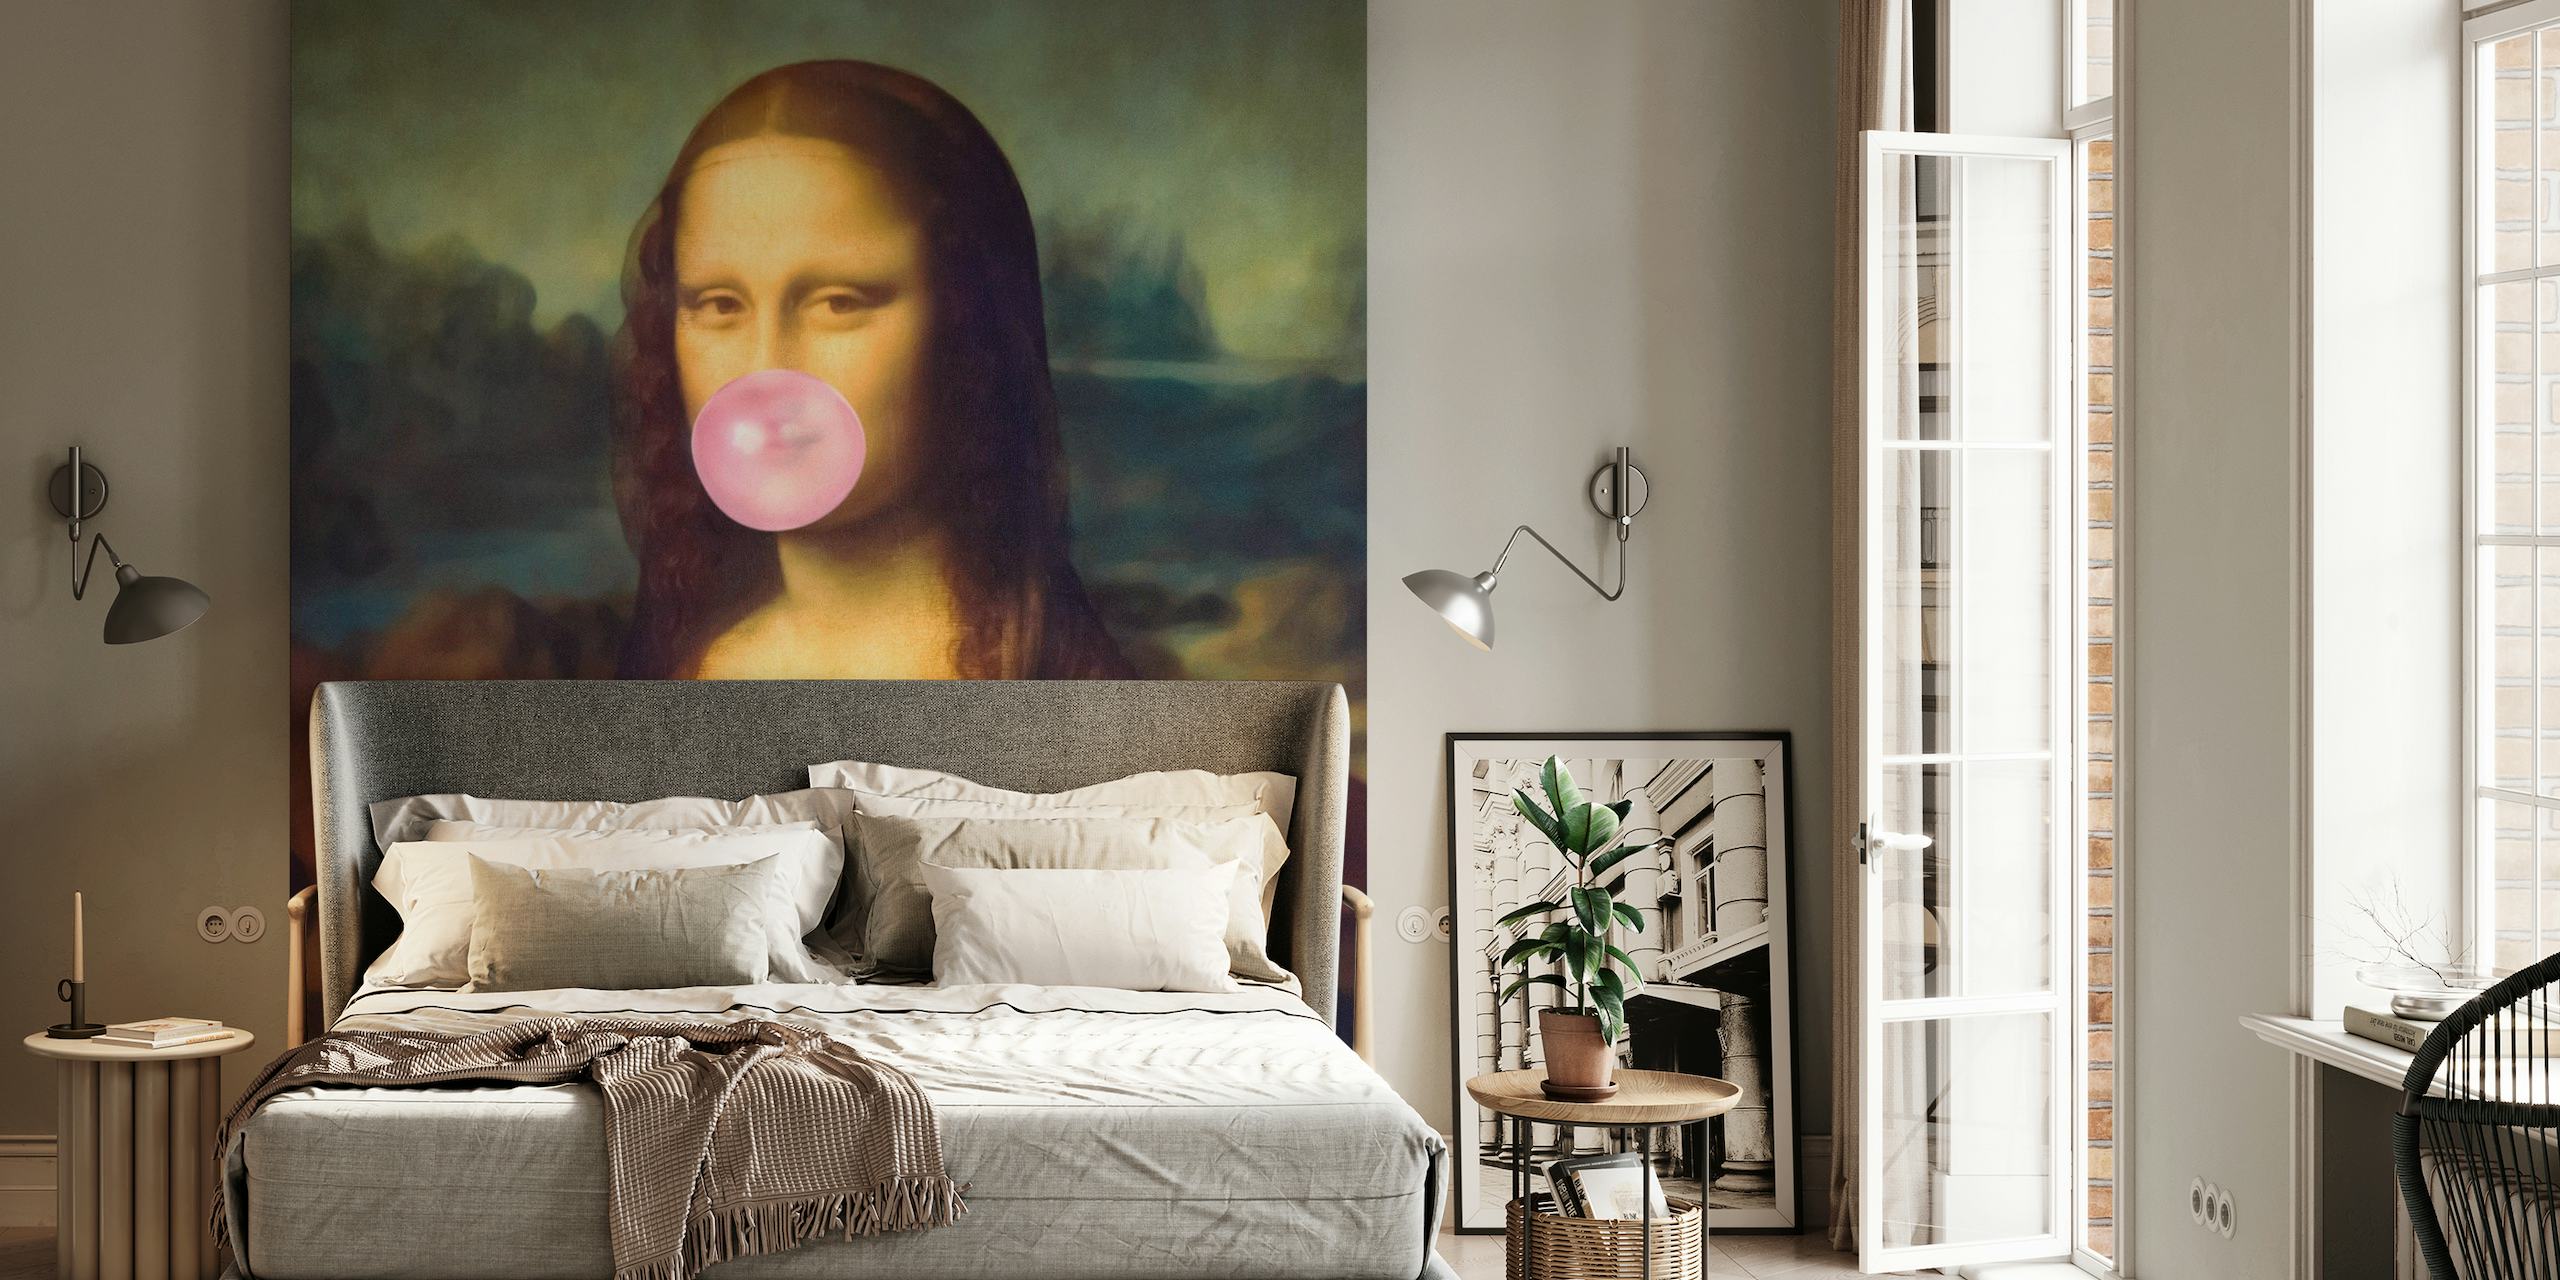 Sassy Mona Lisa papel pintado